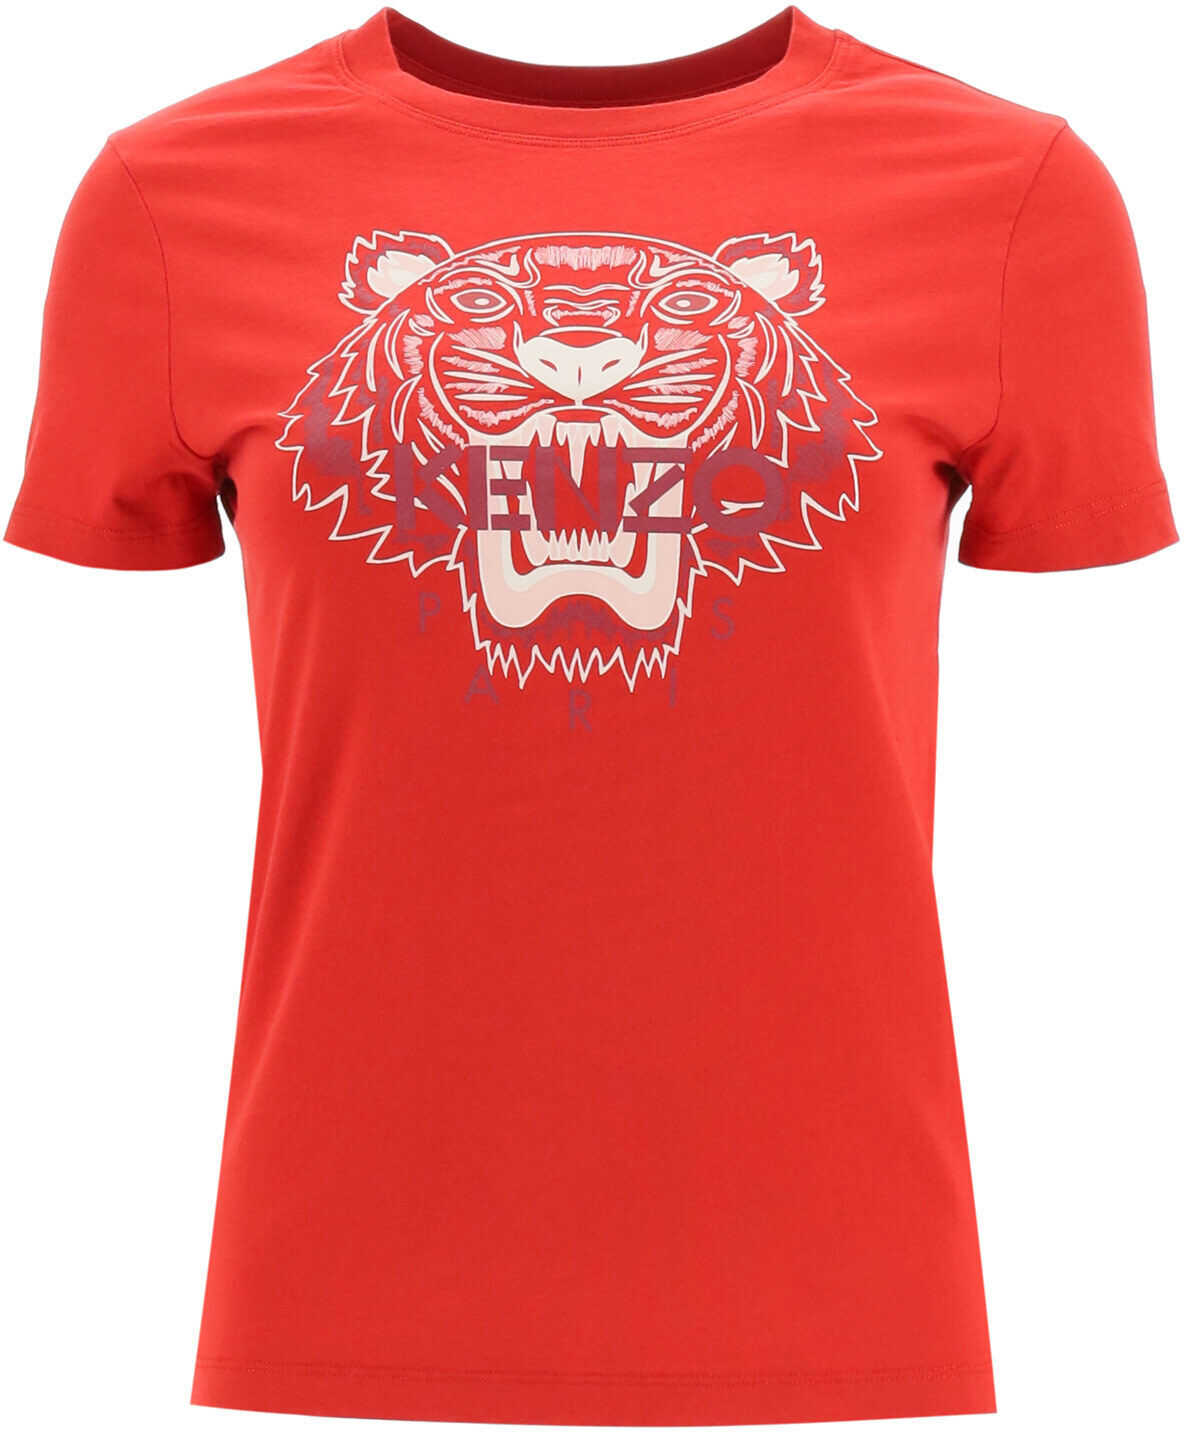 Kenzo Tiger Print T-Shirt CERISE